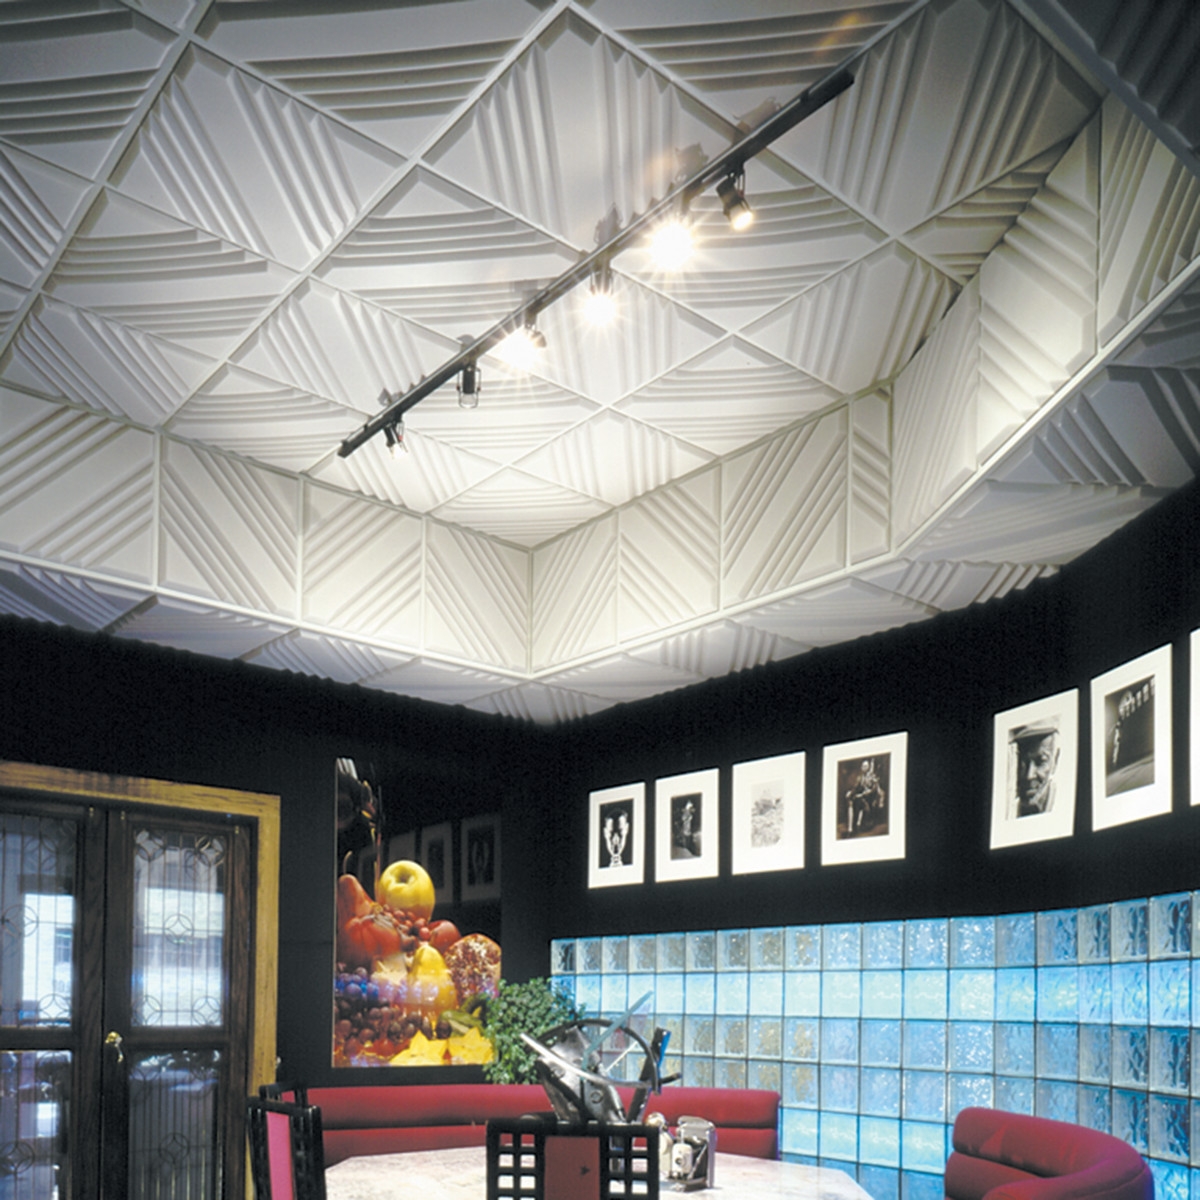 Ceiling Tile Acoustic Pads Ceiling Tile Acoustic Pads interior armstrong ceiling panels ceiling tiles 2x2 acoustic drop 1200 X 1200